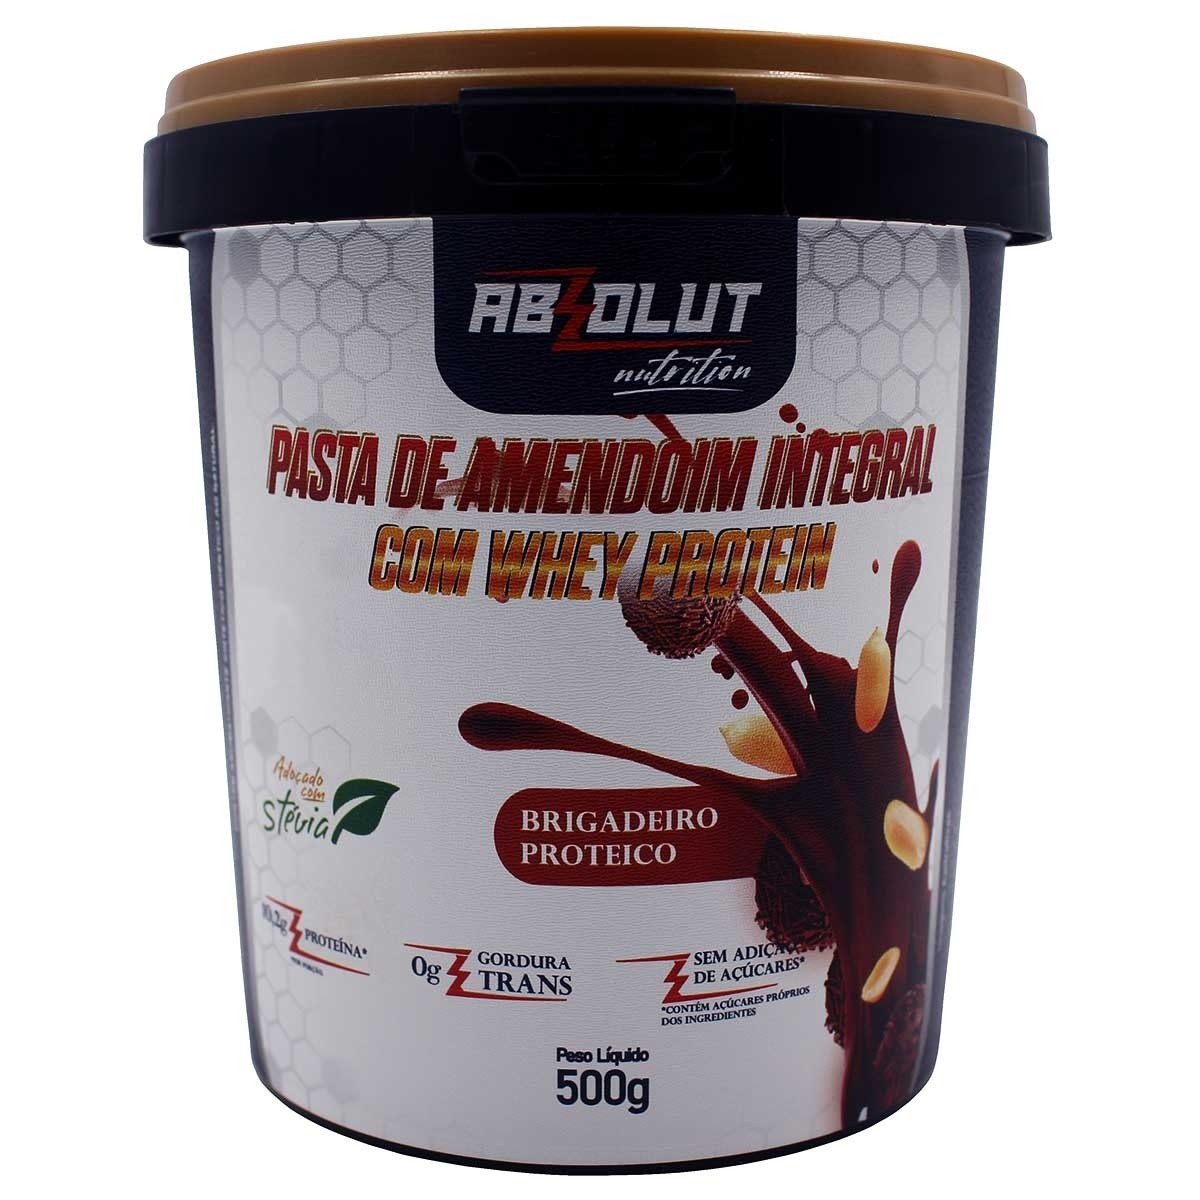 https://www.drogariaminasbrasil.com.br/media/product/edf/pasta-de-amendoim-integral-com-whey-protein-sabor-brigadeiro-proteico-500g-absolut-nutrition-bcd.jpg